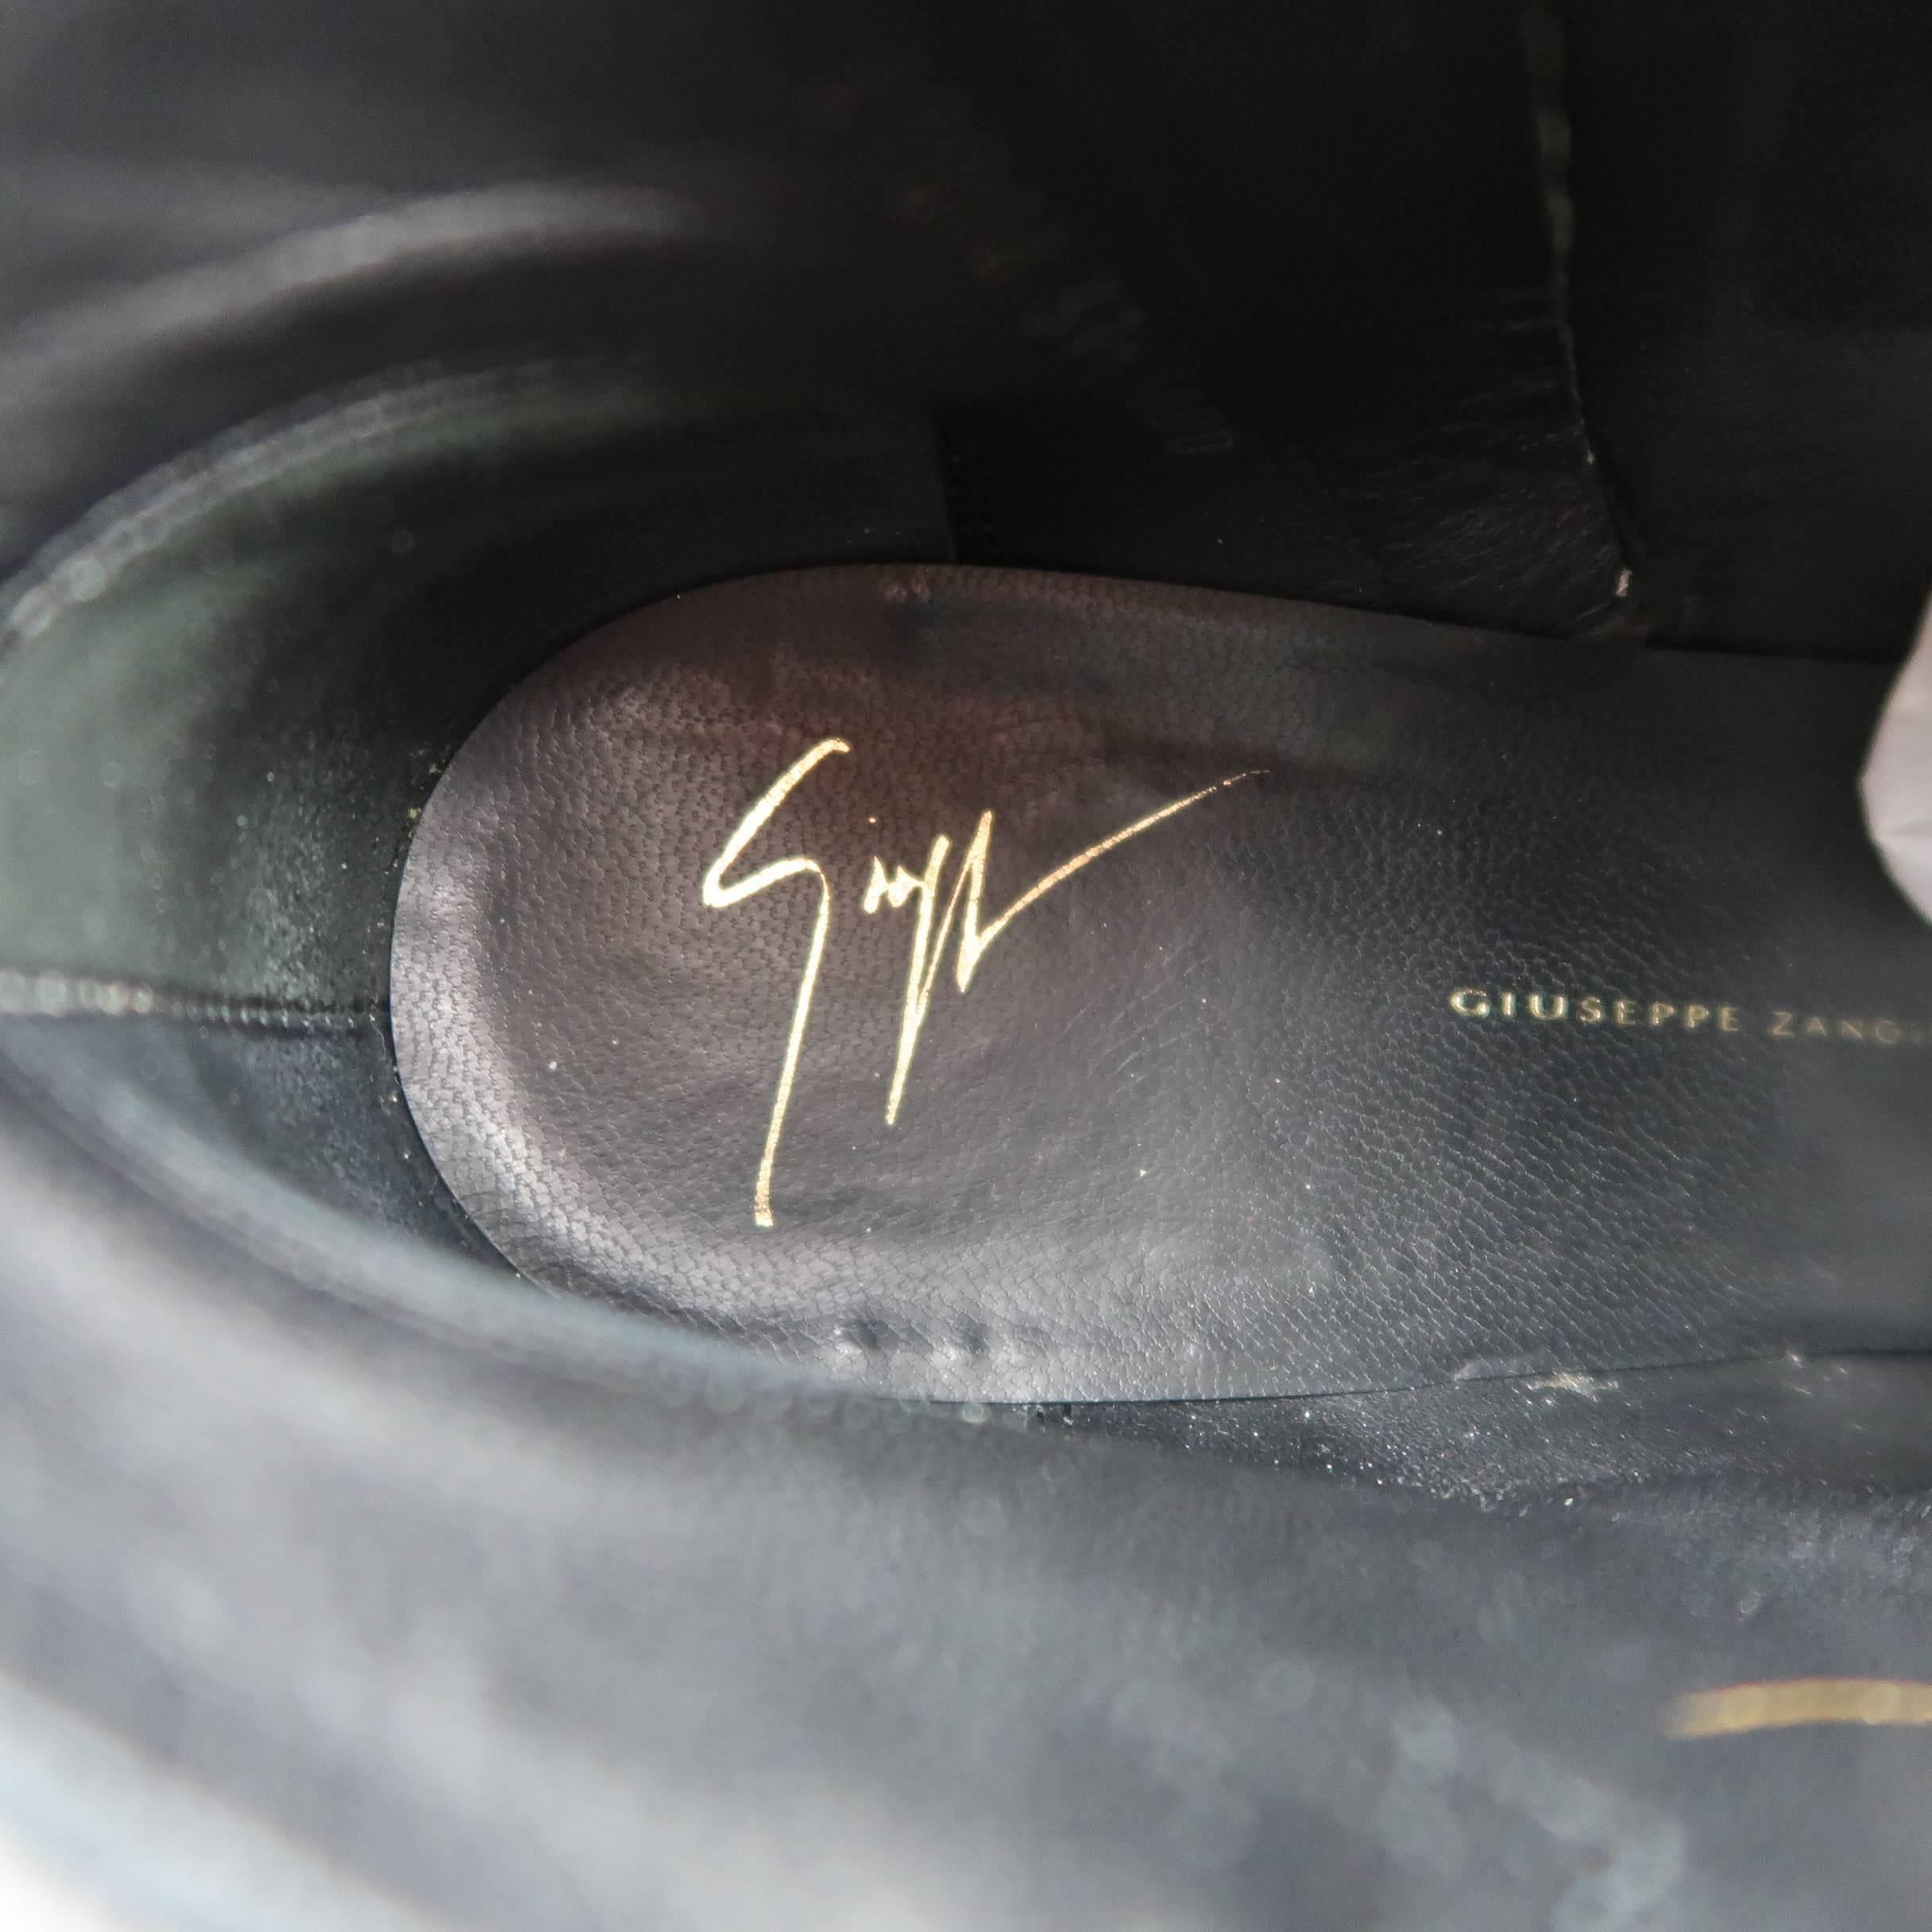 GIUSEPPE ZANOTTI Size 7.5 Black & White Snake Leather Ankle Boots 3